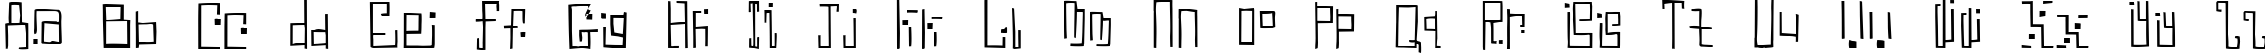 Пример написания английского алфавита шрифтом Antimony Blue